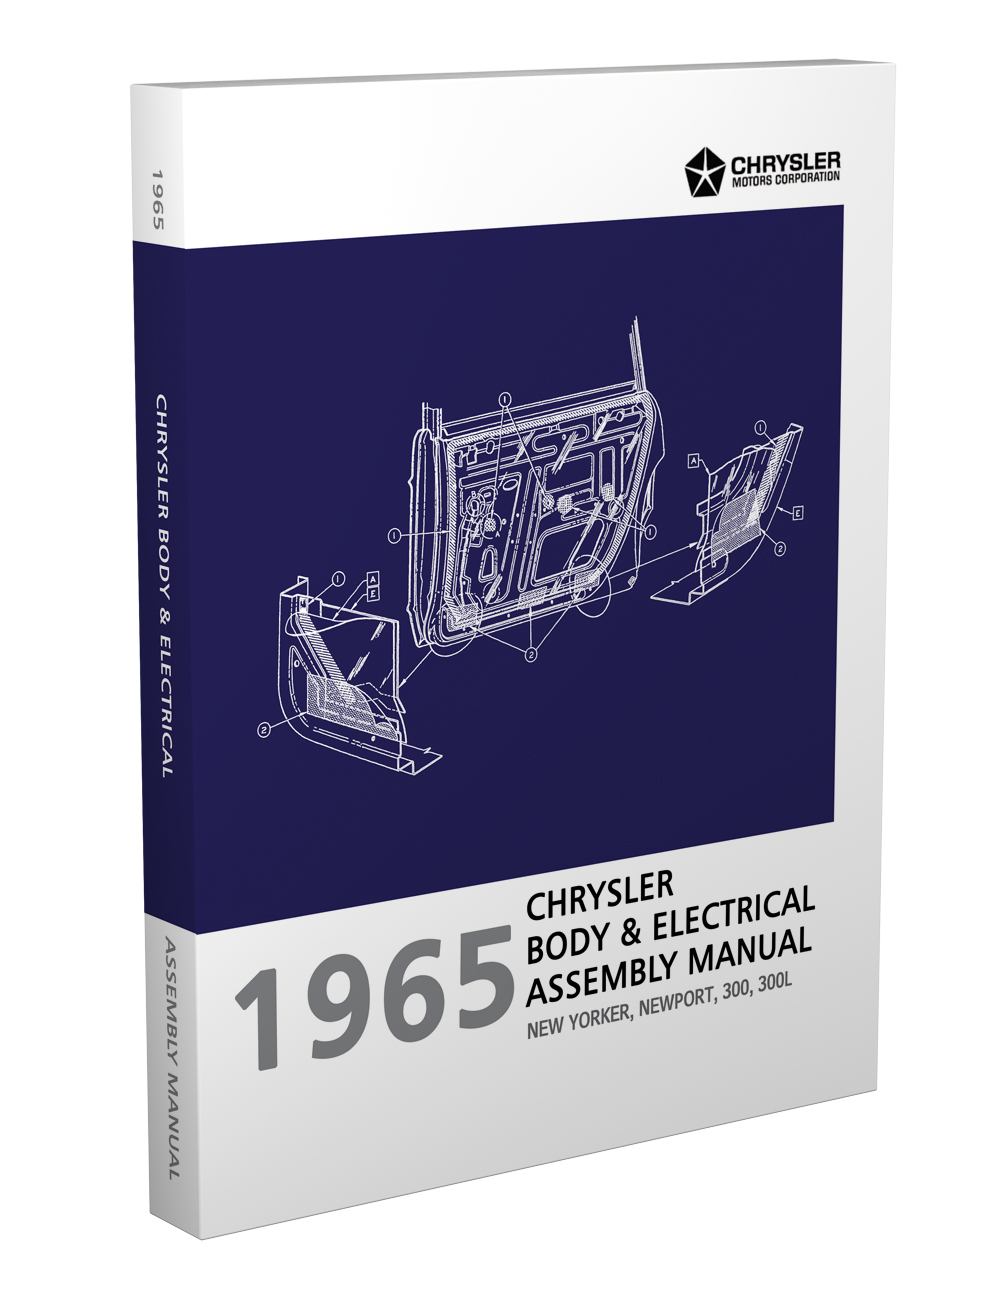 1965 Chrysler Body & Electrical Assembly Manual Reprint